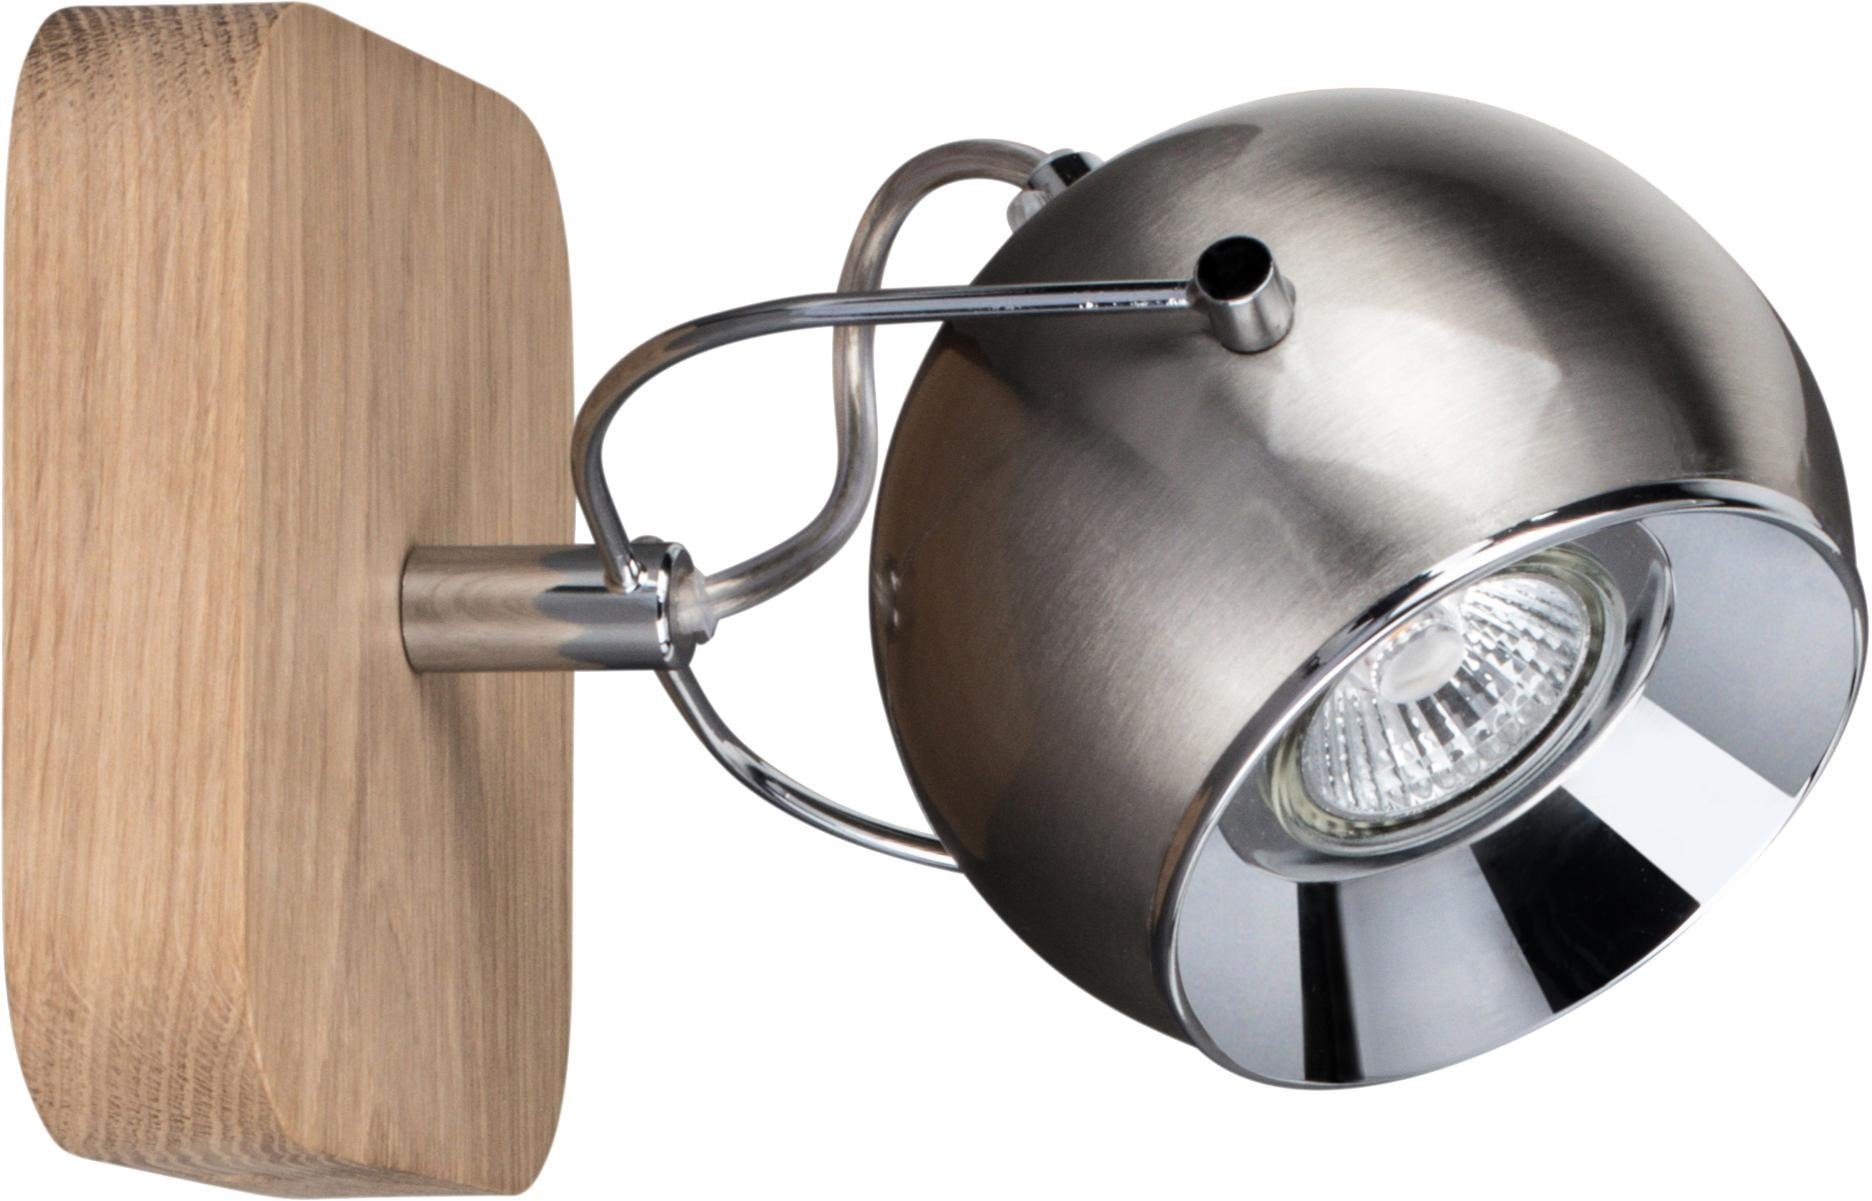 spot light wandlamp ball wood inclusief ledlampen, natuurproduct van eikenhout, flexibele spots zilver